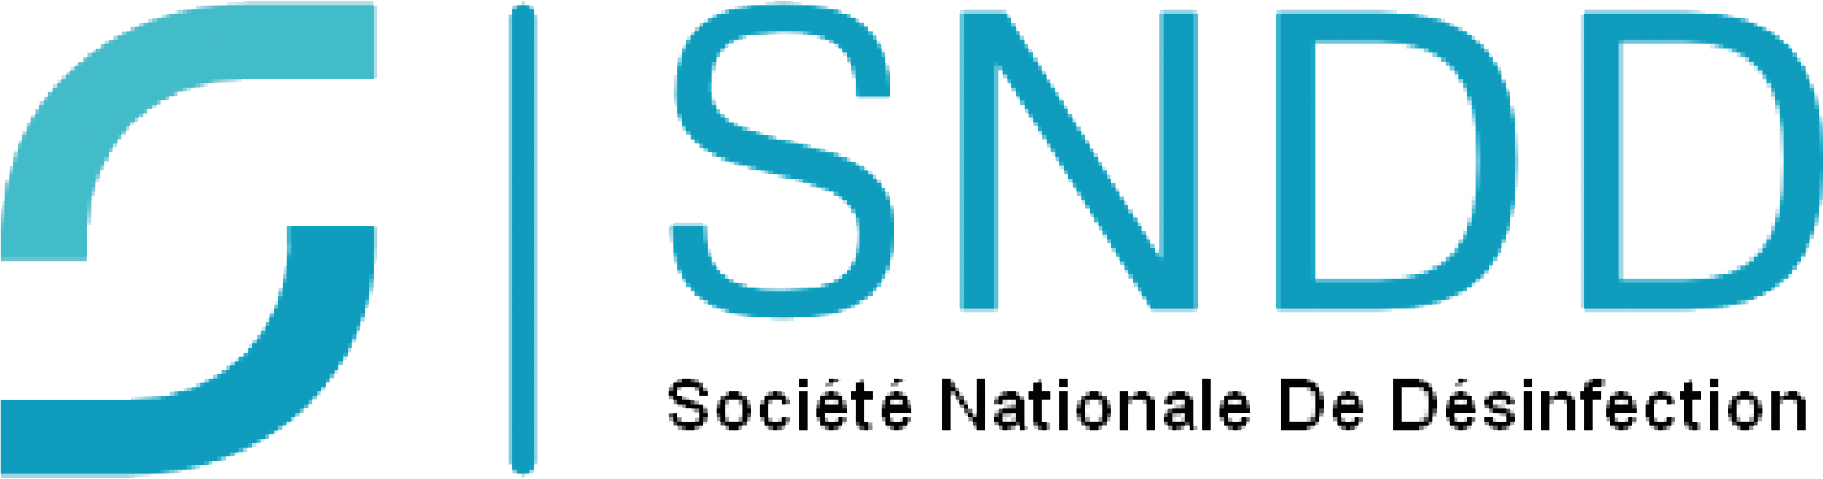 Logo SNDD